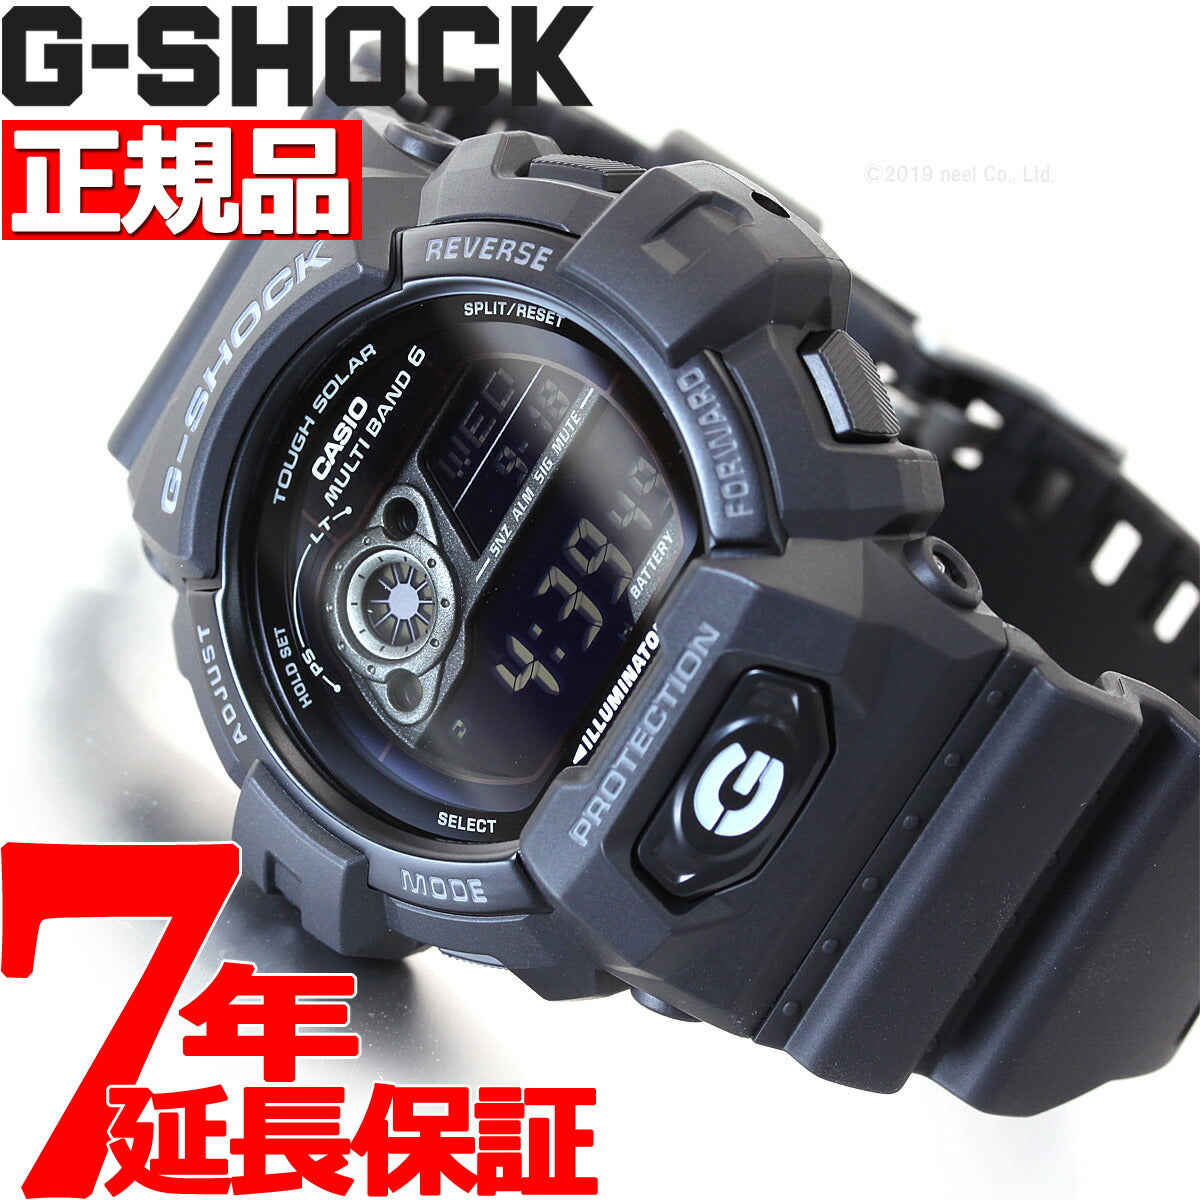 G-SHOCK 電波 ソーラー 電波時計 カシオ Gショック 腕時計 メンズ タフ 